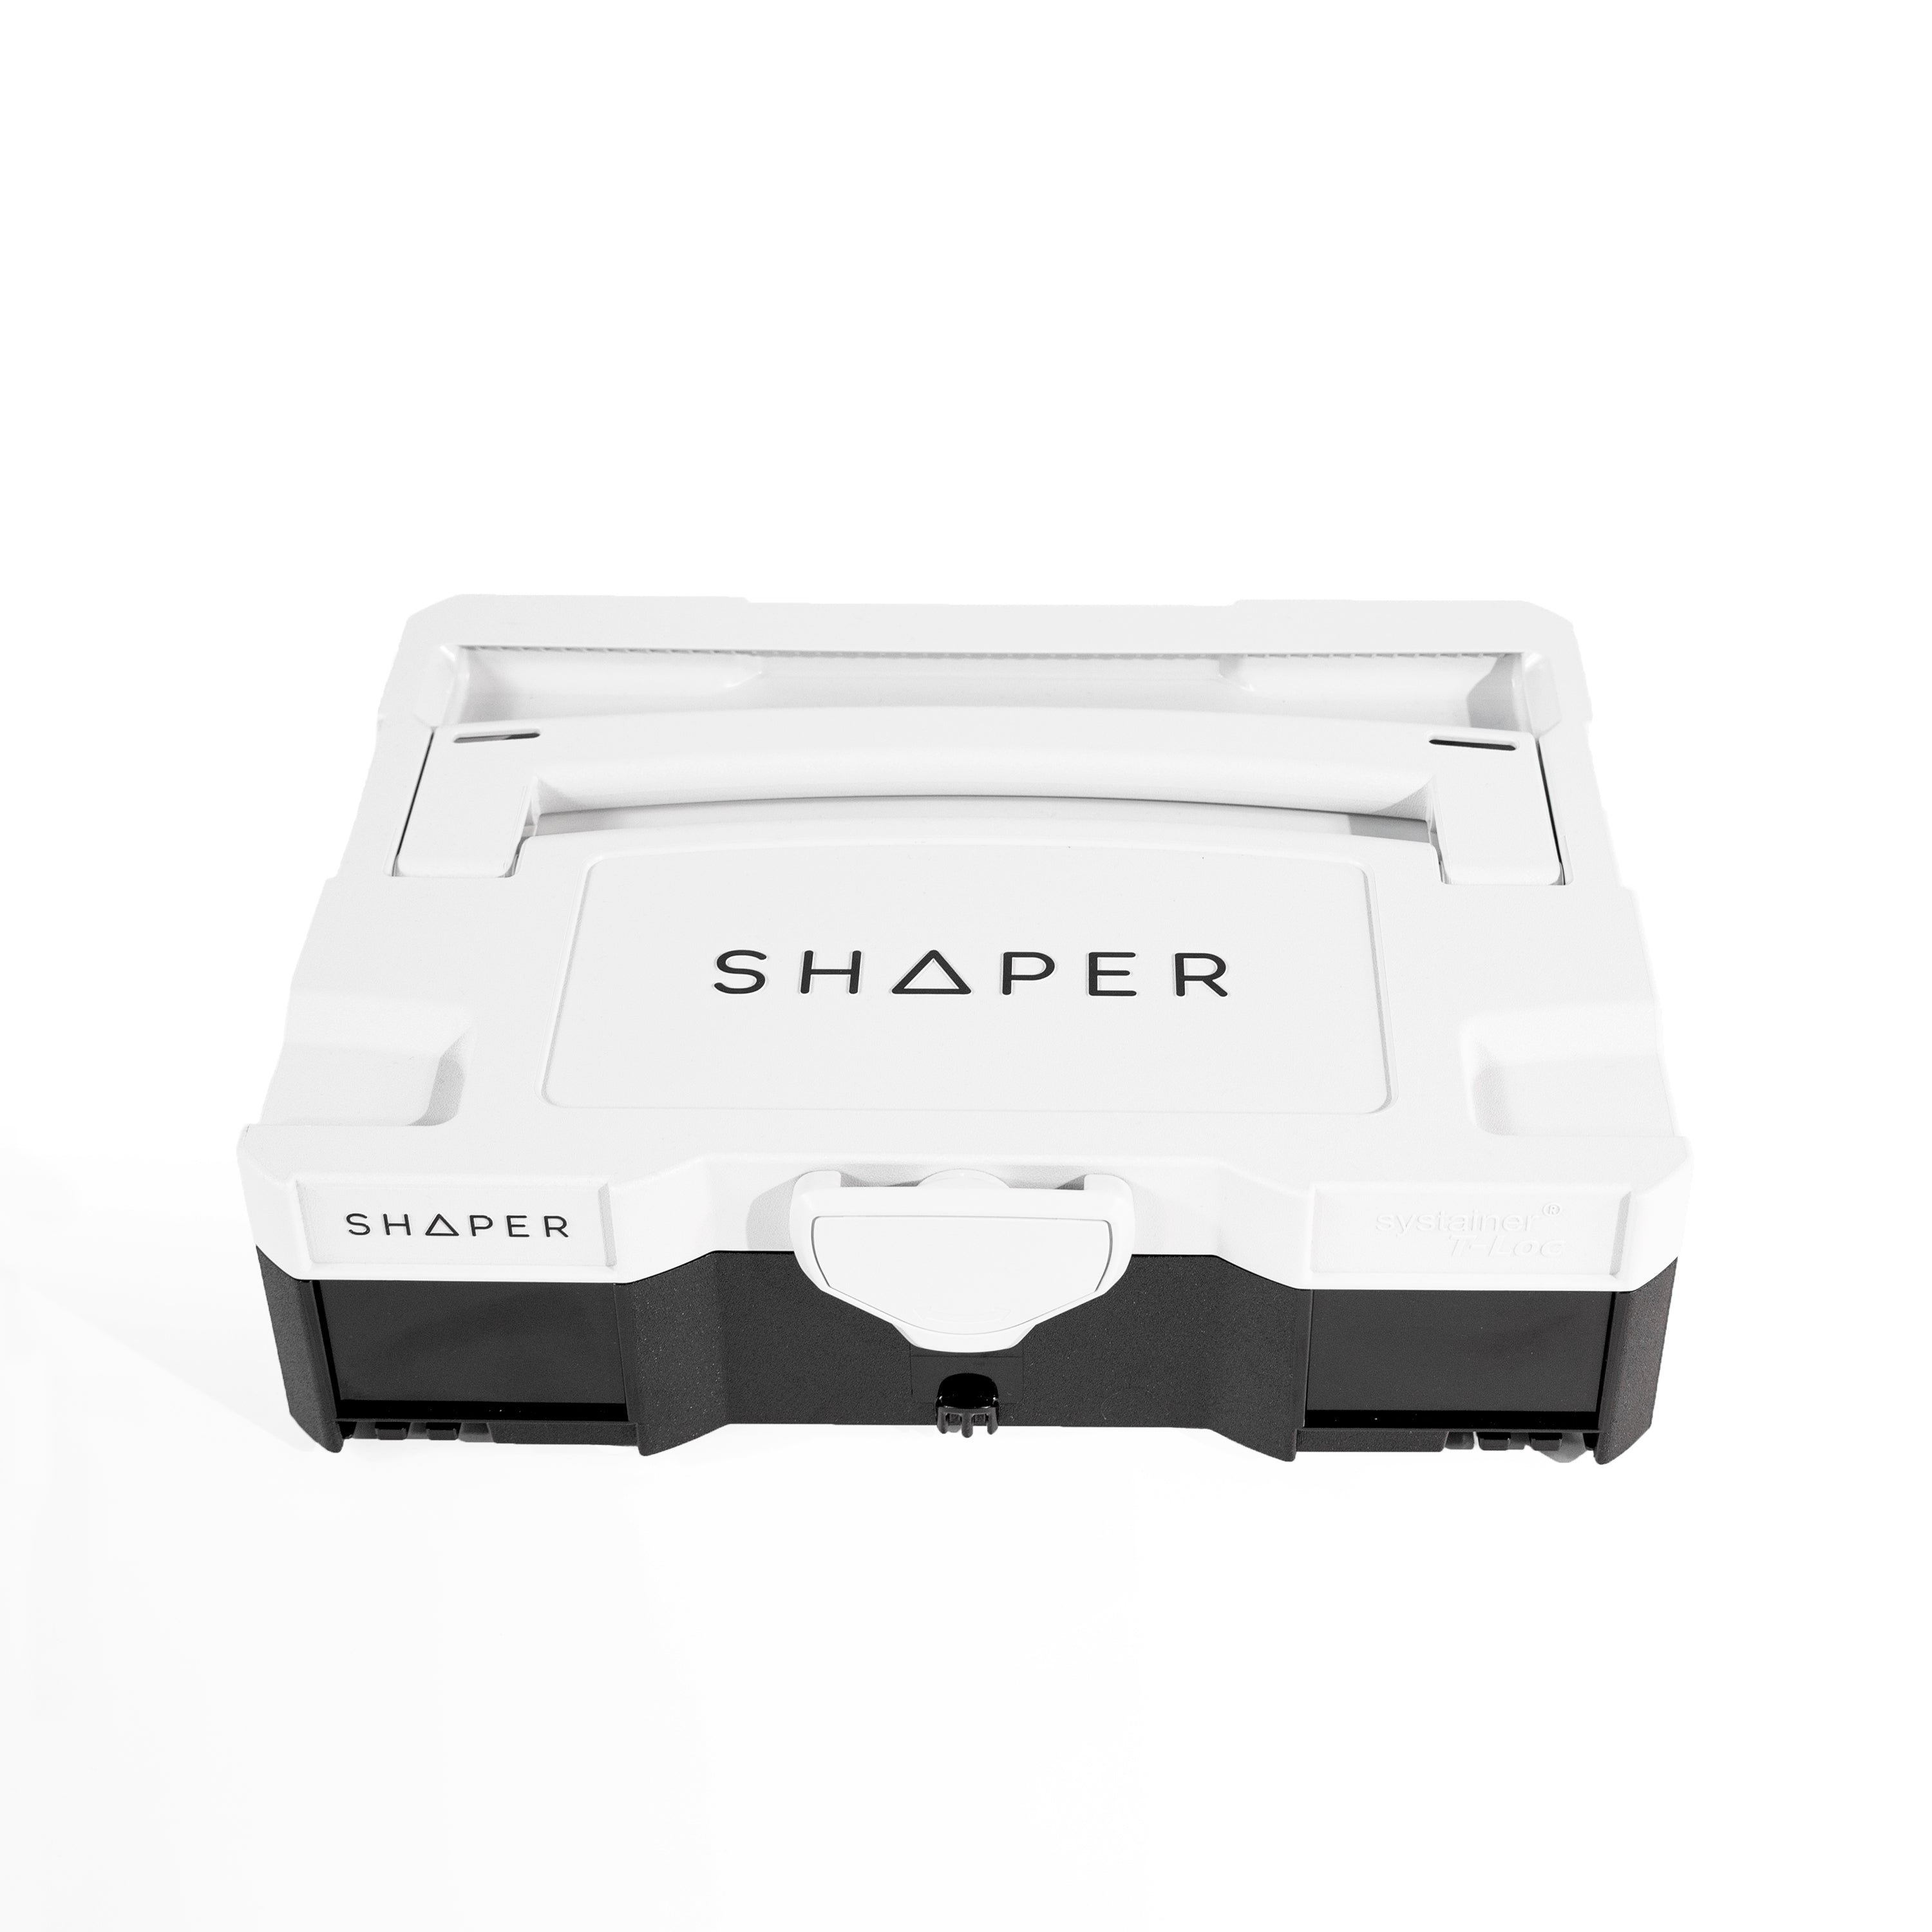 Shaper Complete Origin System